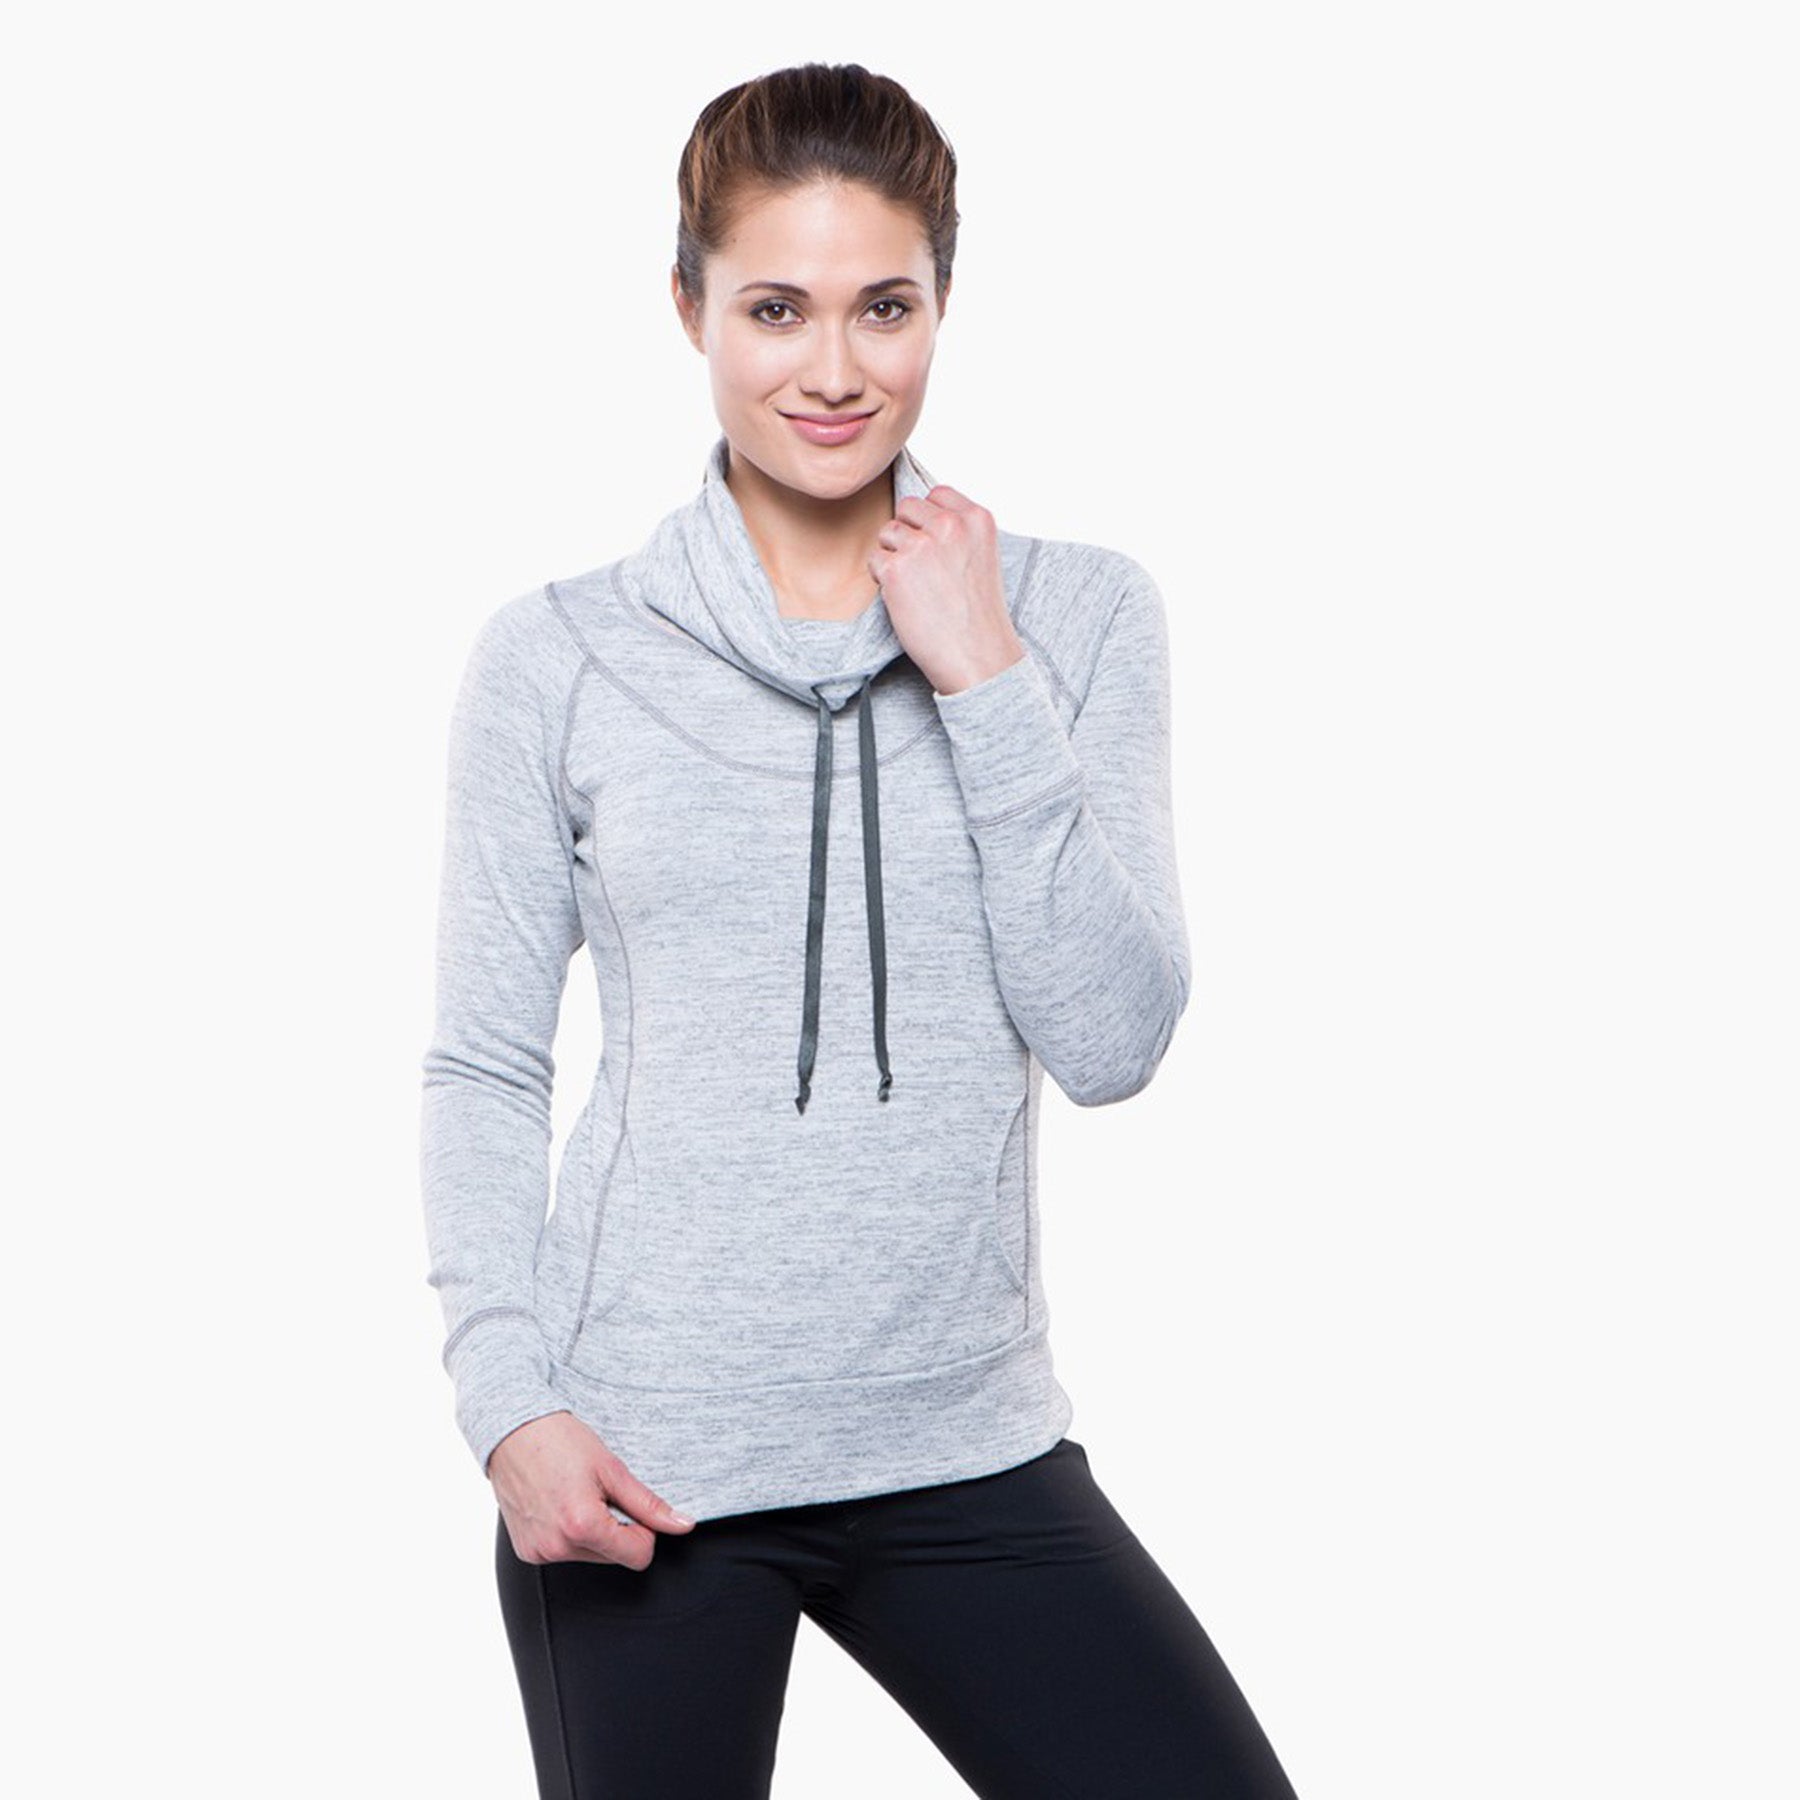 Kuhl Full Zip Athletic Sweatshirts for Women